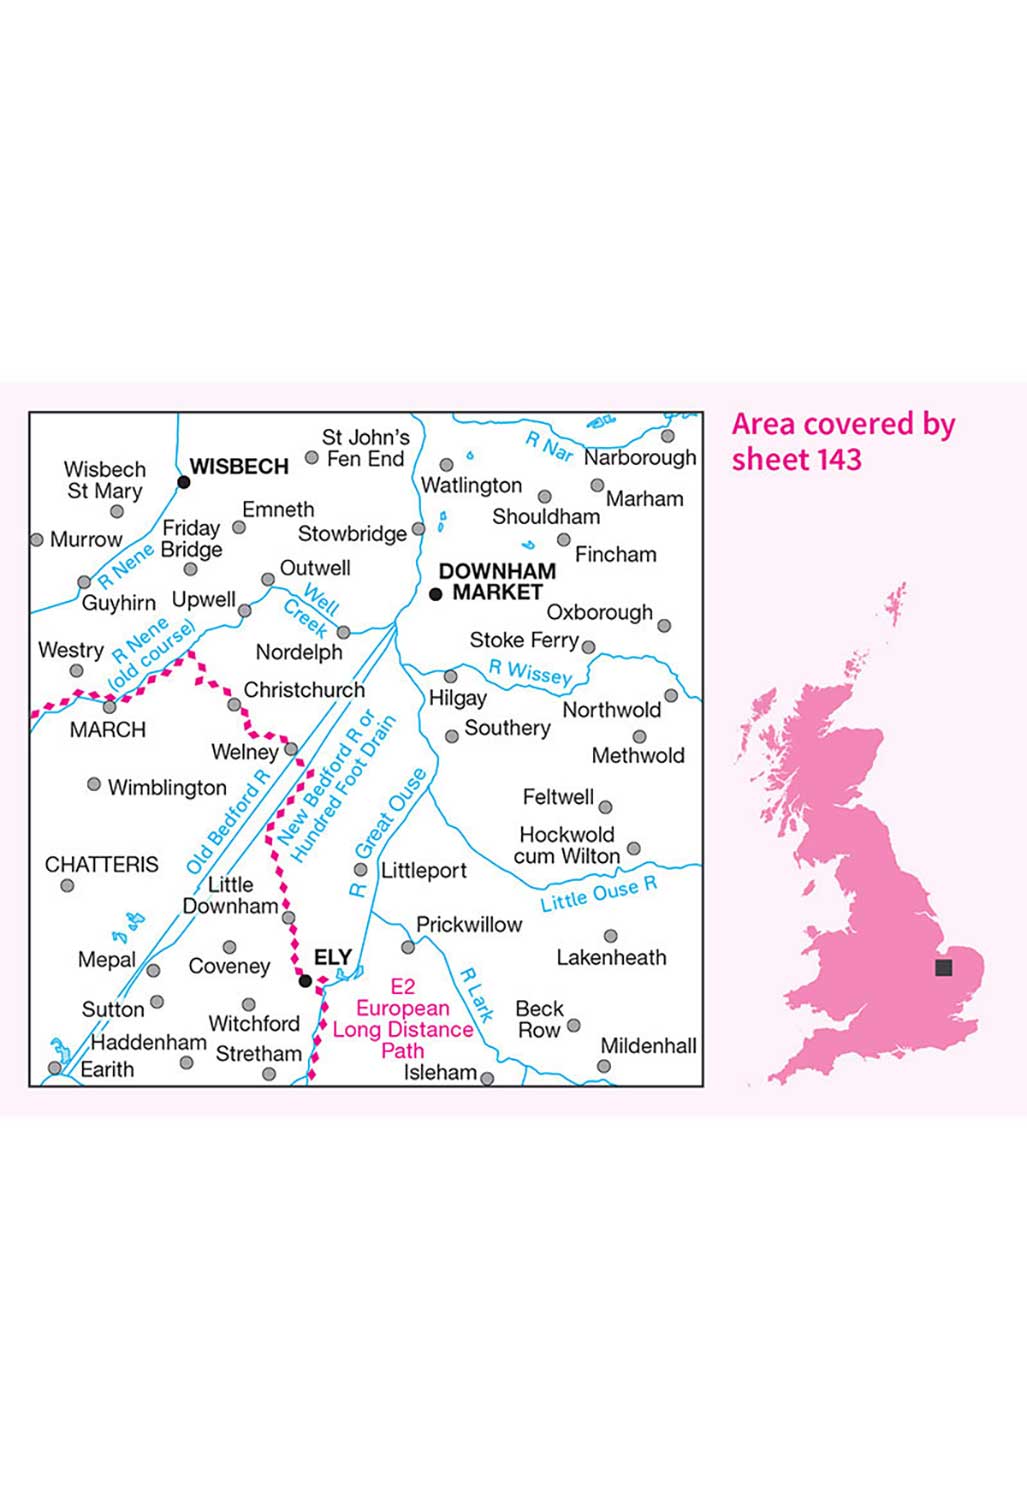 Ordnance Survey Ely, Wisbech & Downham Market - Landranger 143 Map